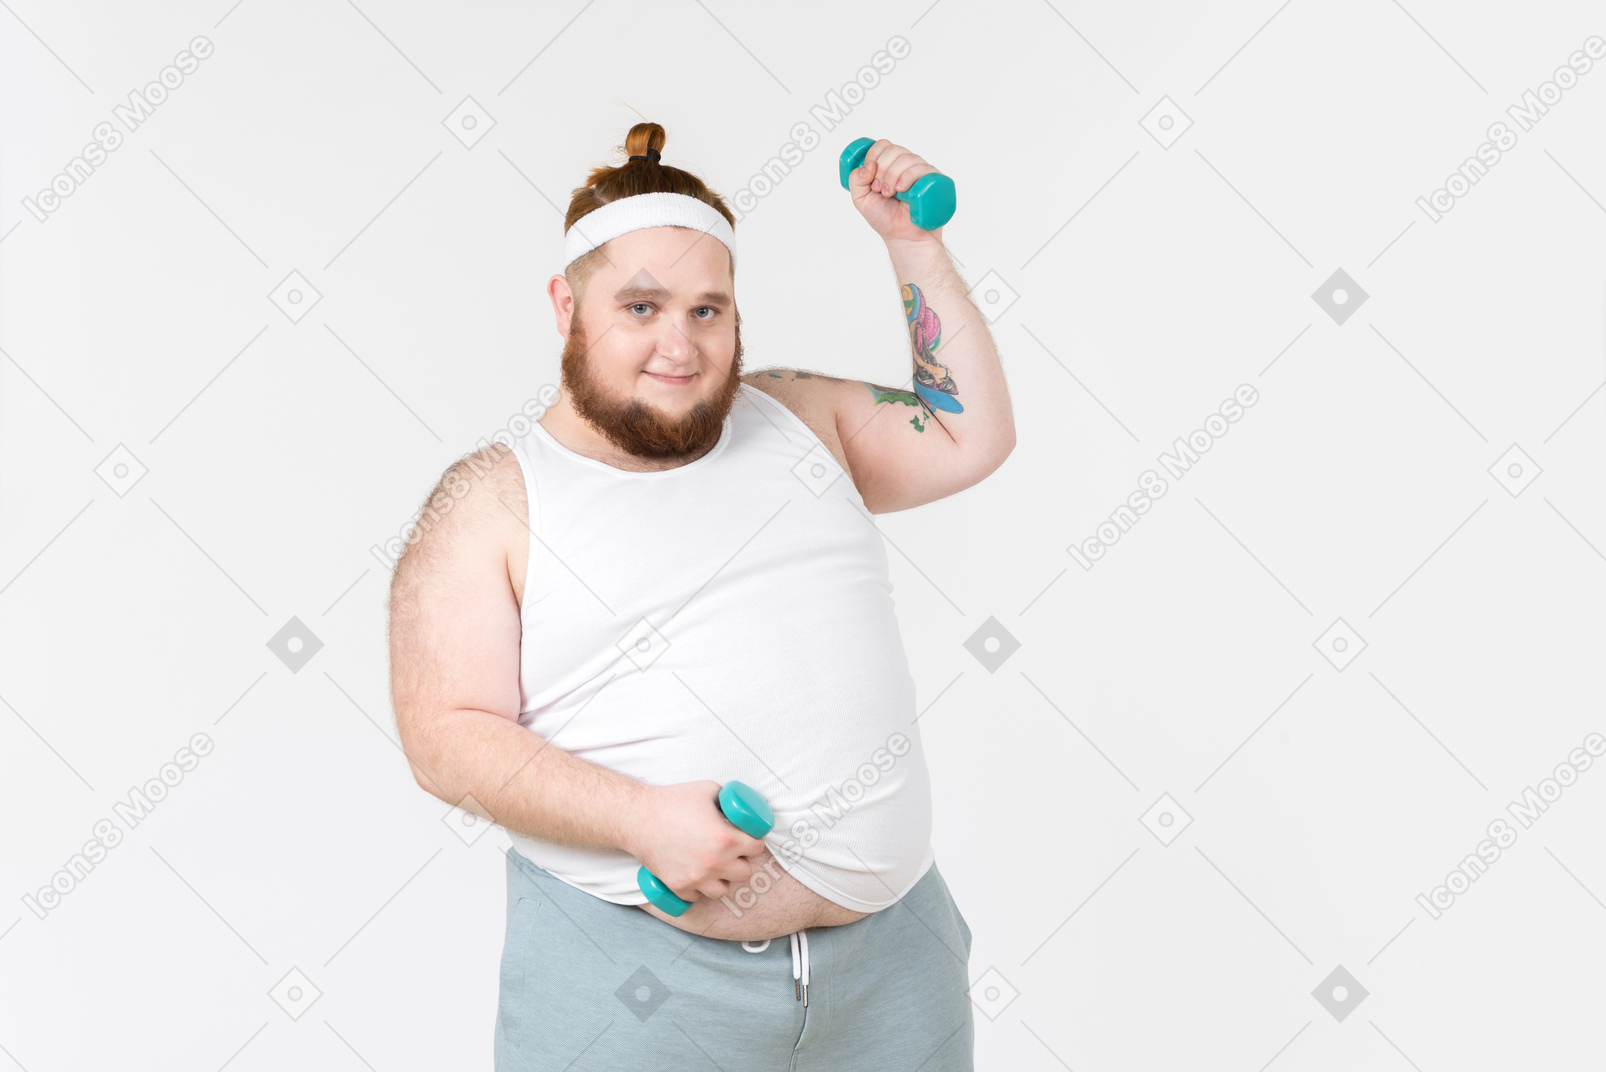 Big sportsman lifting hand weights